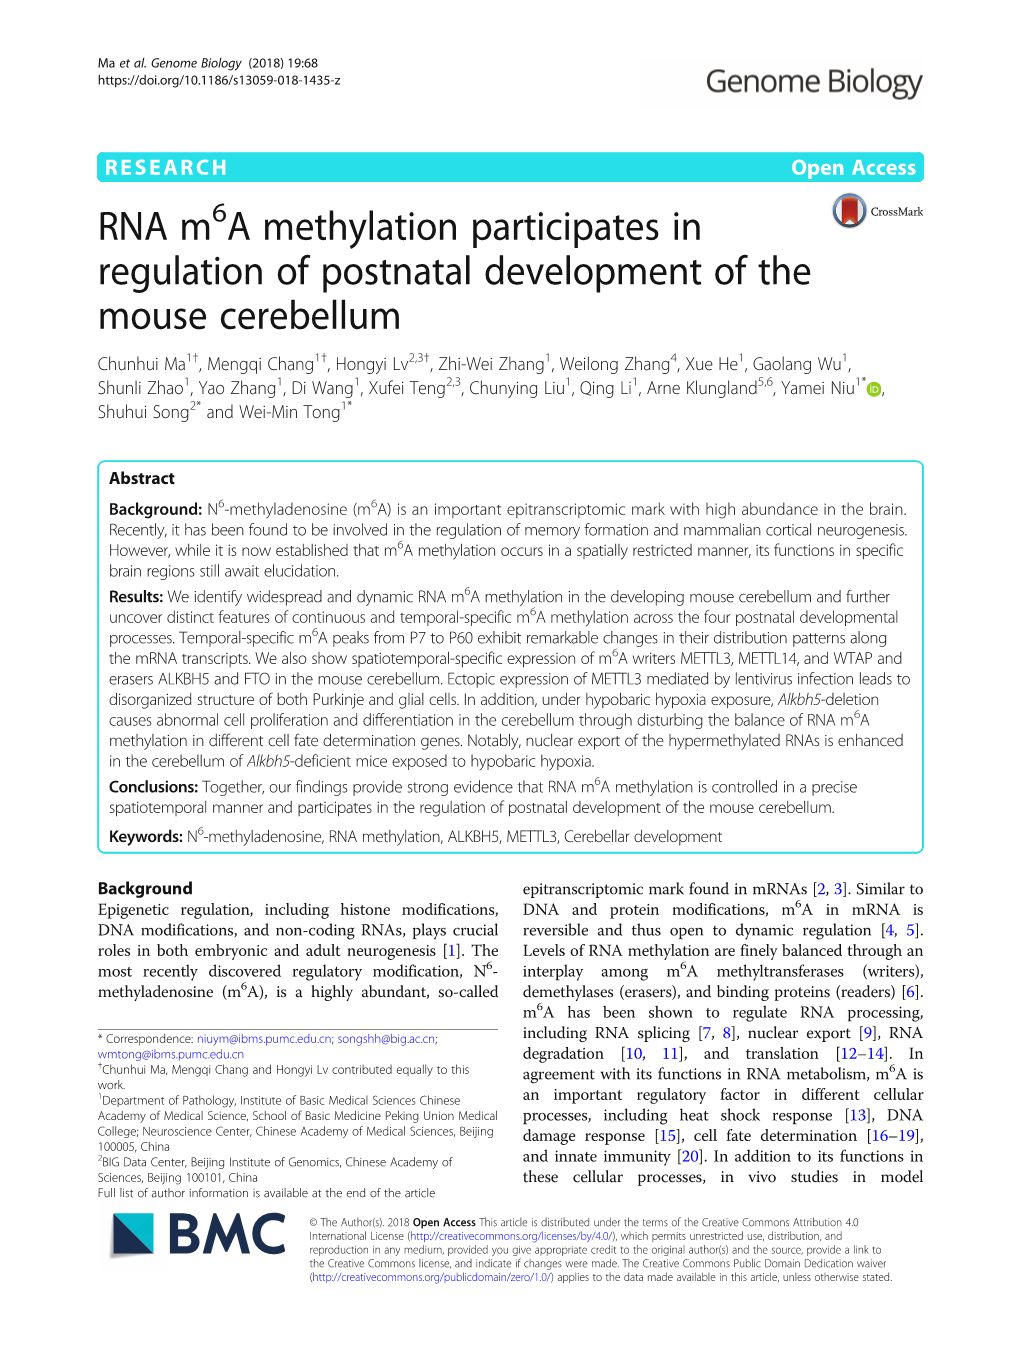 RNA M6a Methylation Participates in Regulation of Postnatal Development